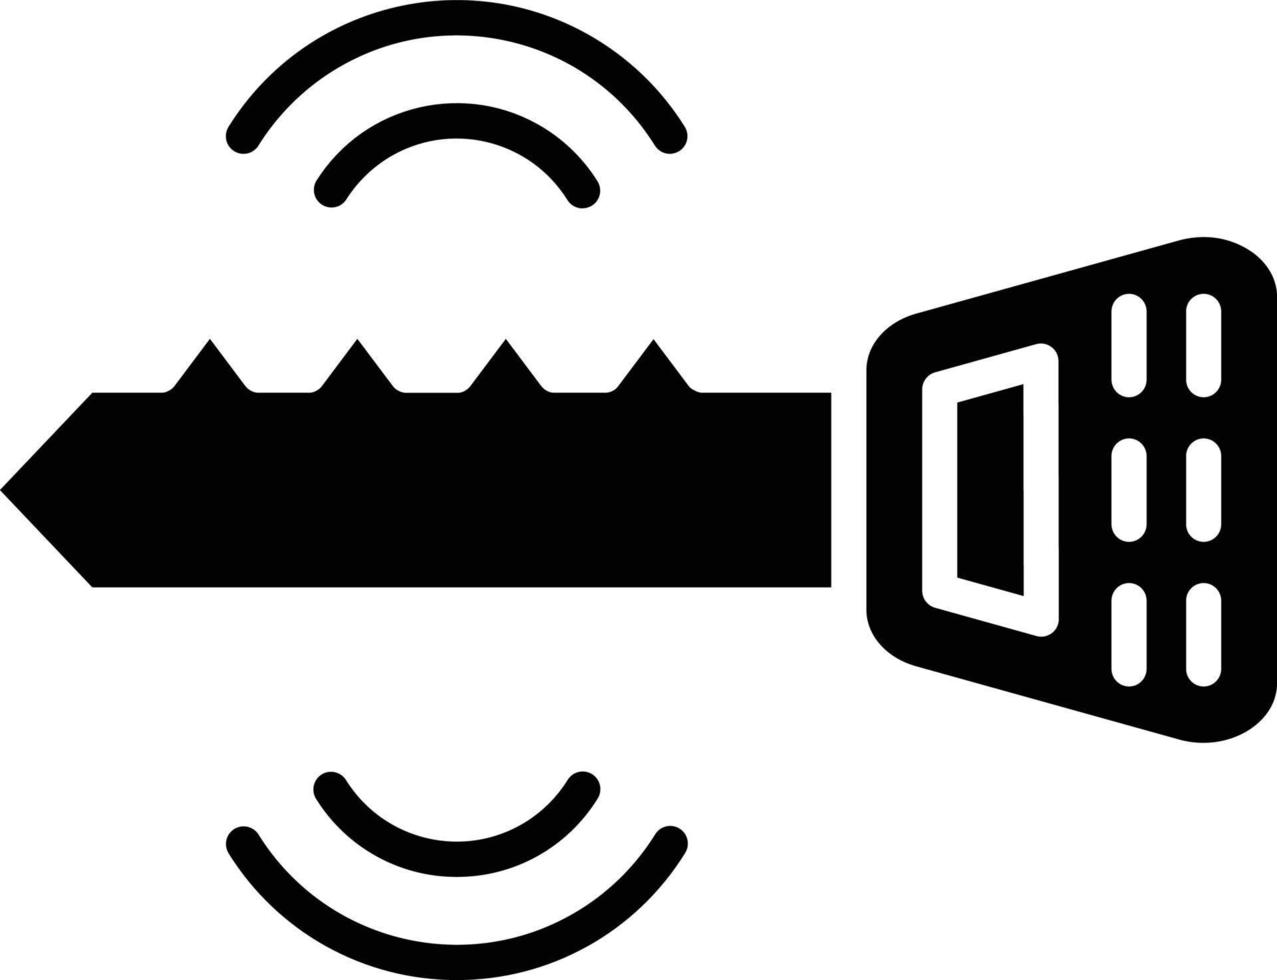 Smart Key Icon Style vector